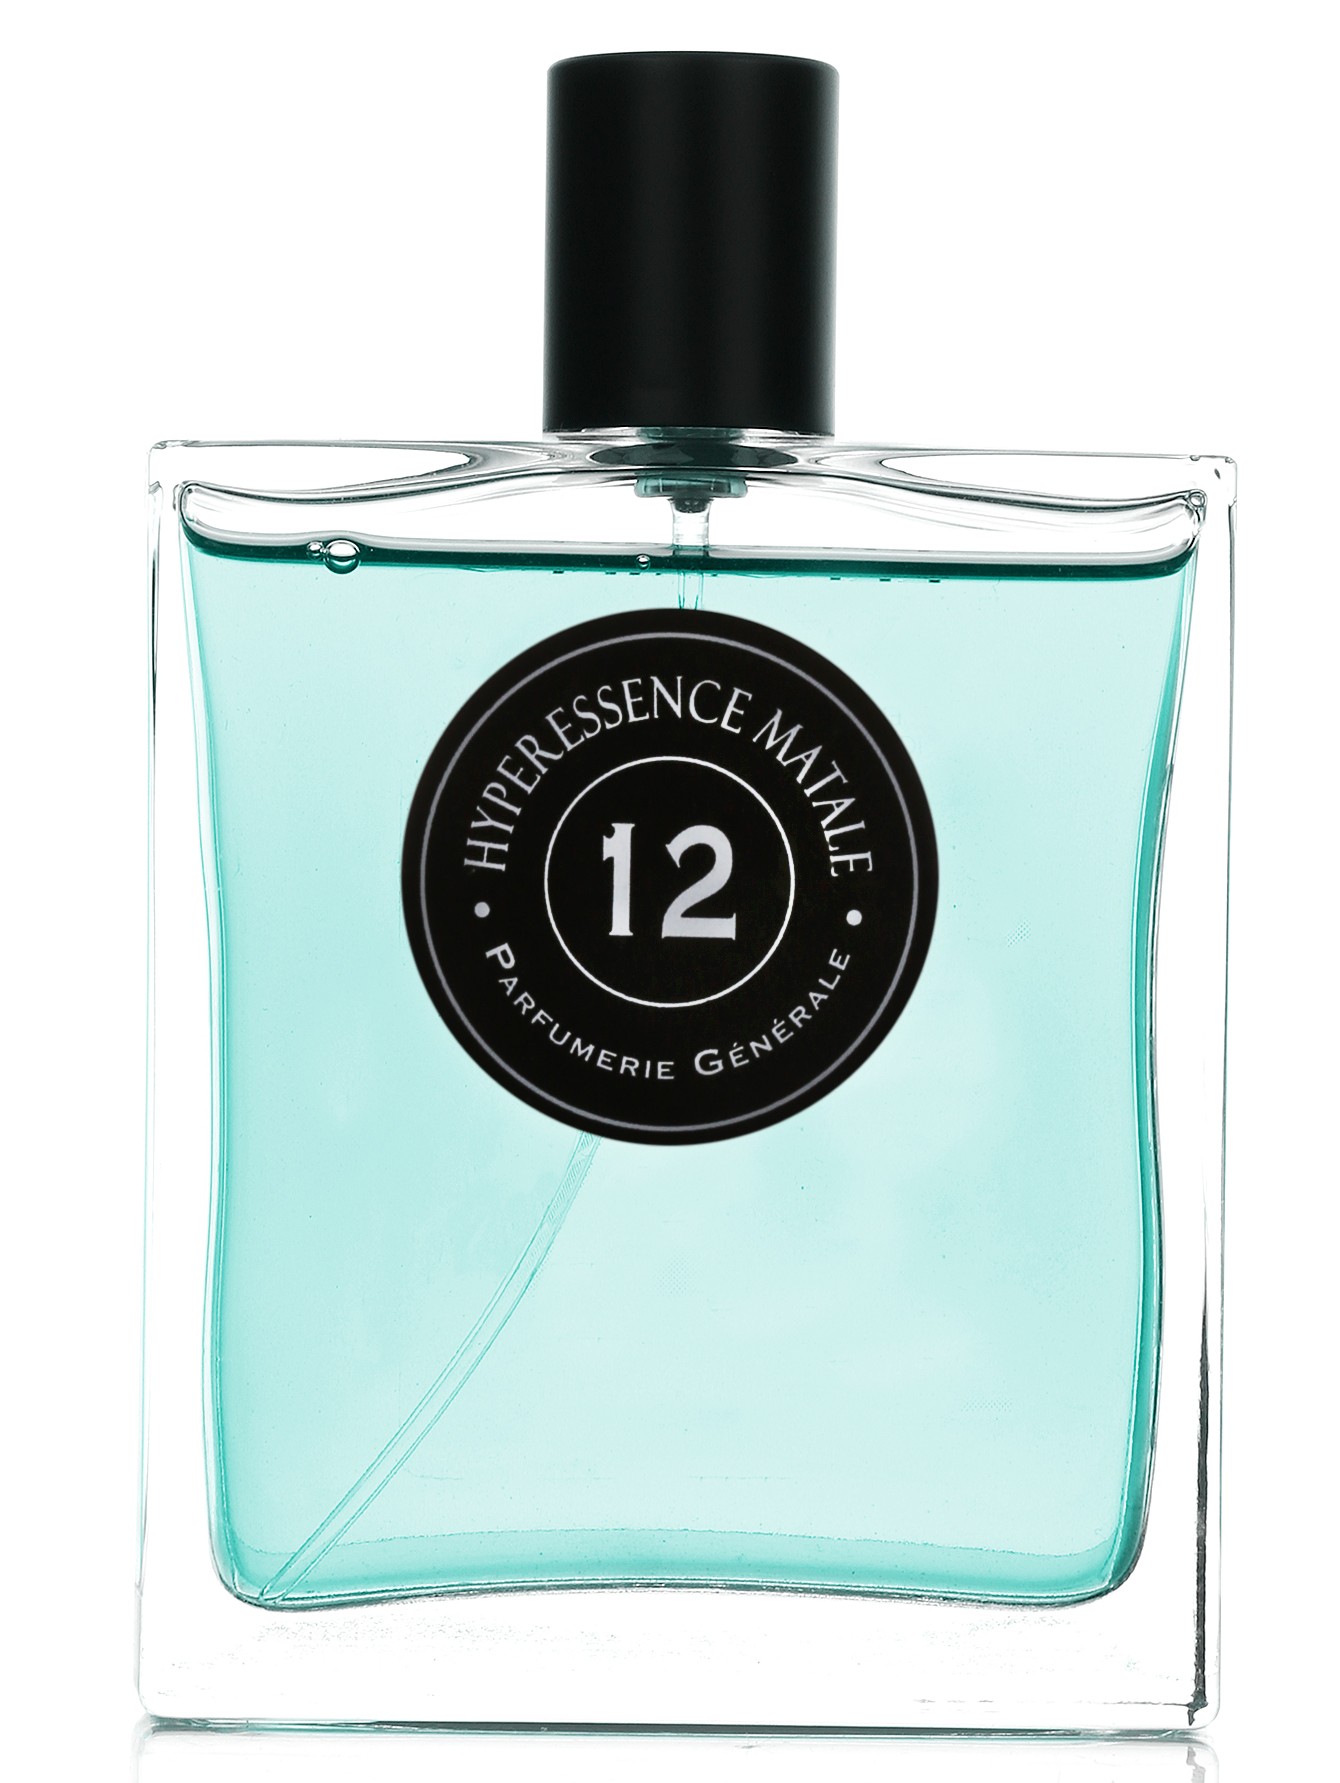  Парфюмированная вода - Hyperessence Matale Generale Parfumerie, 100ml - Общий вид